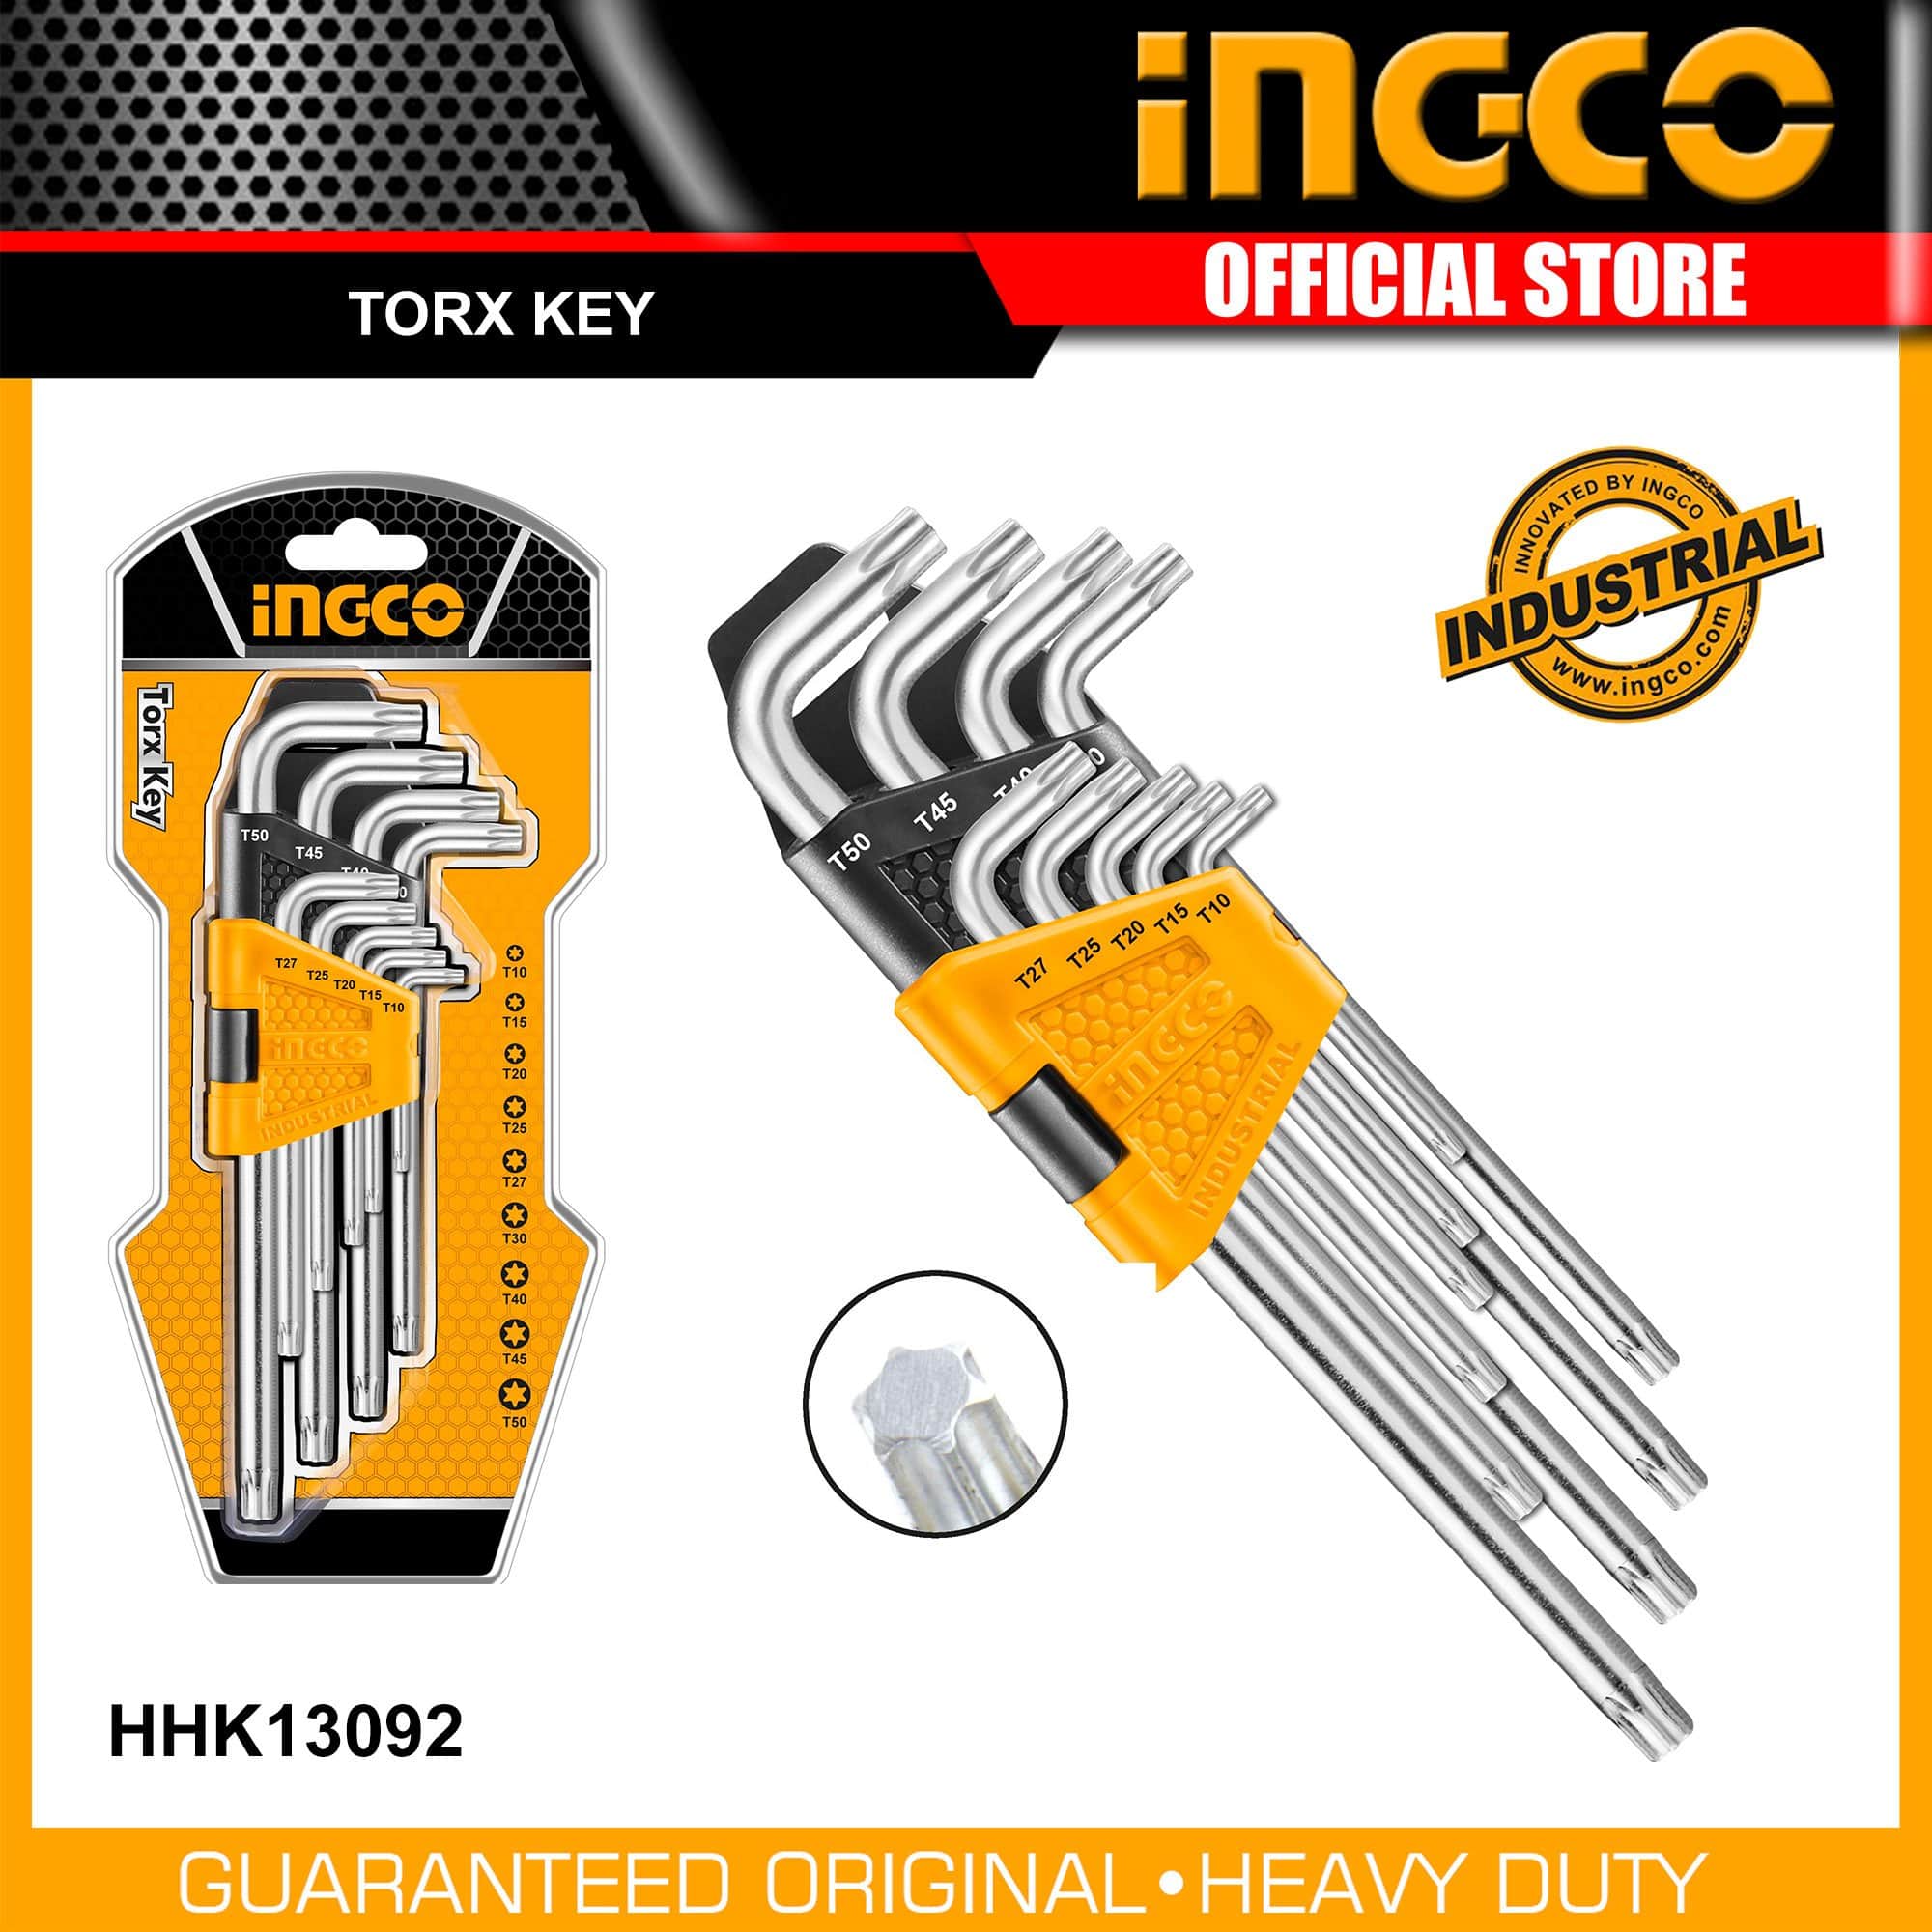 Ingco Extra Long Arm 9 Pieces Torx Key Set - HHK13092 | Supply Master | Accra, Ghana Tools Building Steel Engineering Hardware tool